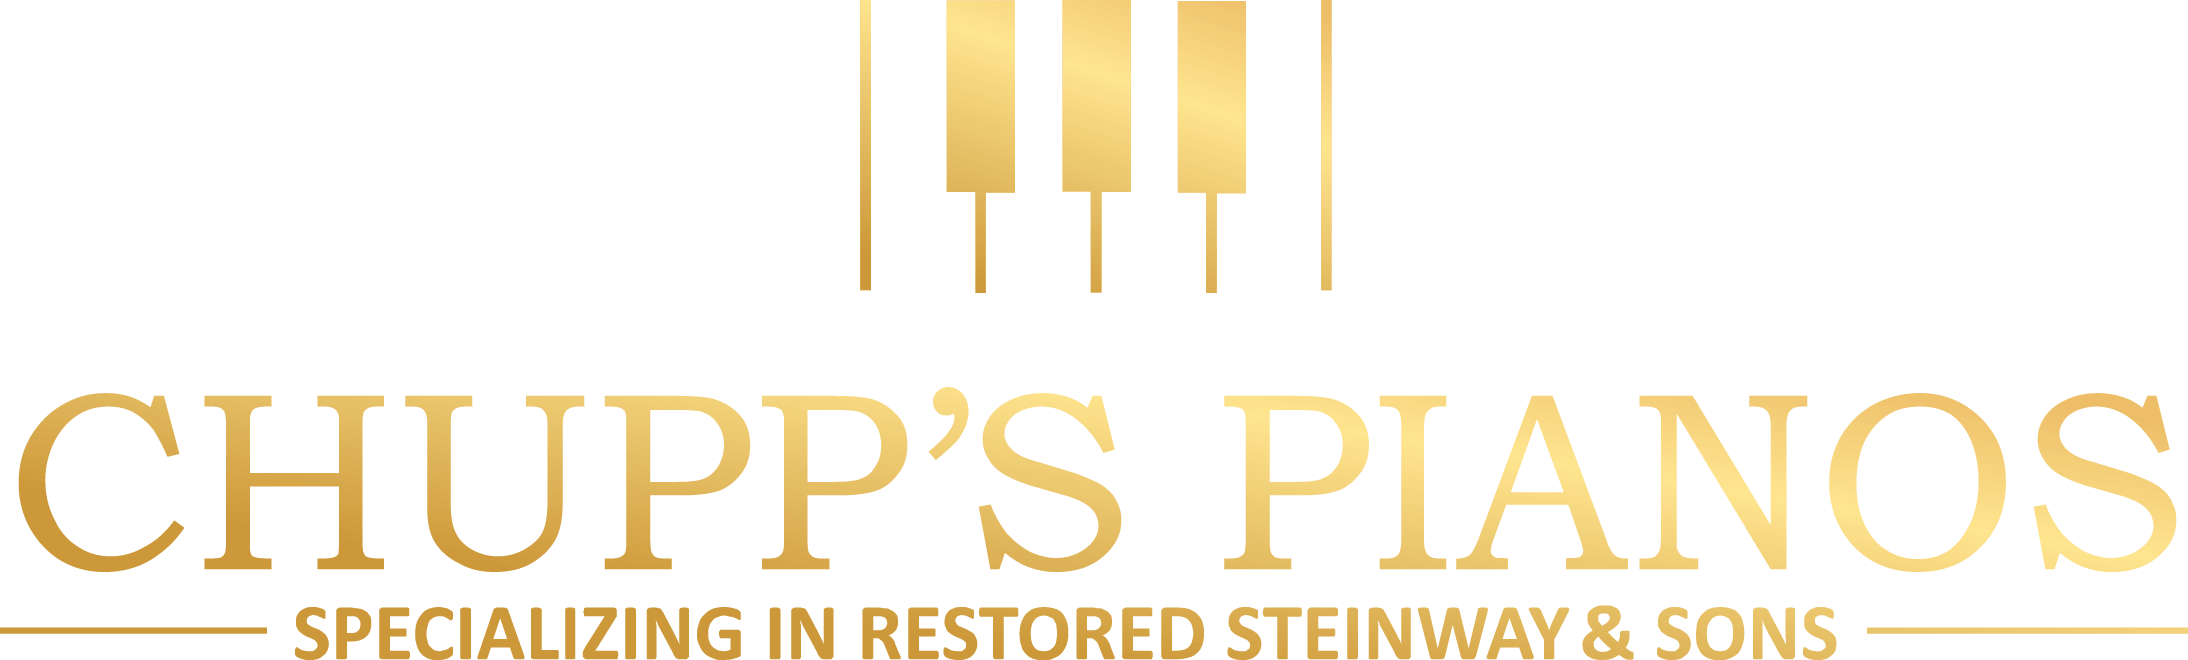 Gold Piano Logo - Restoring a “Golden Age” Steinway Grand Piano's Piano